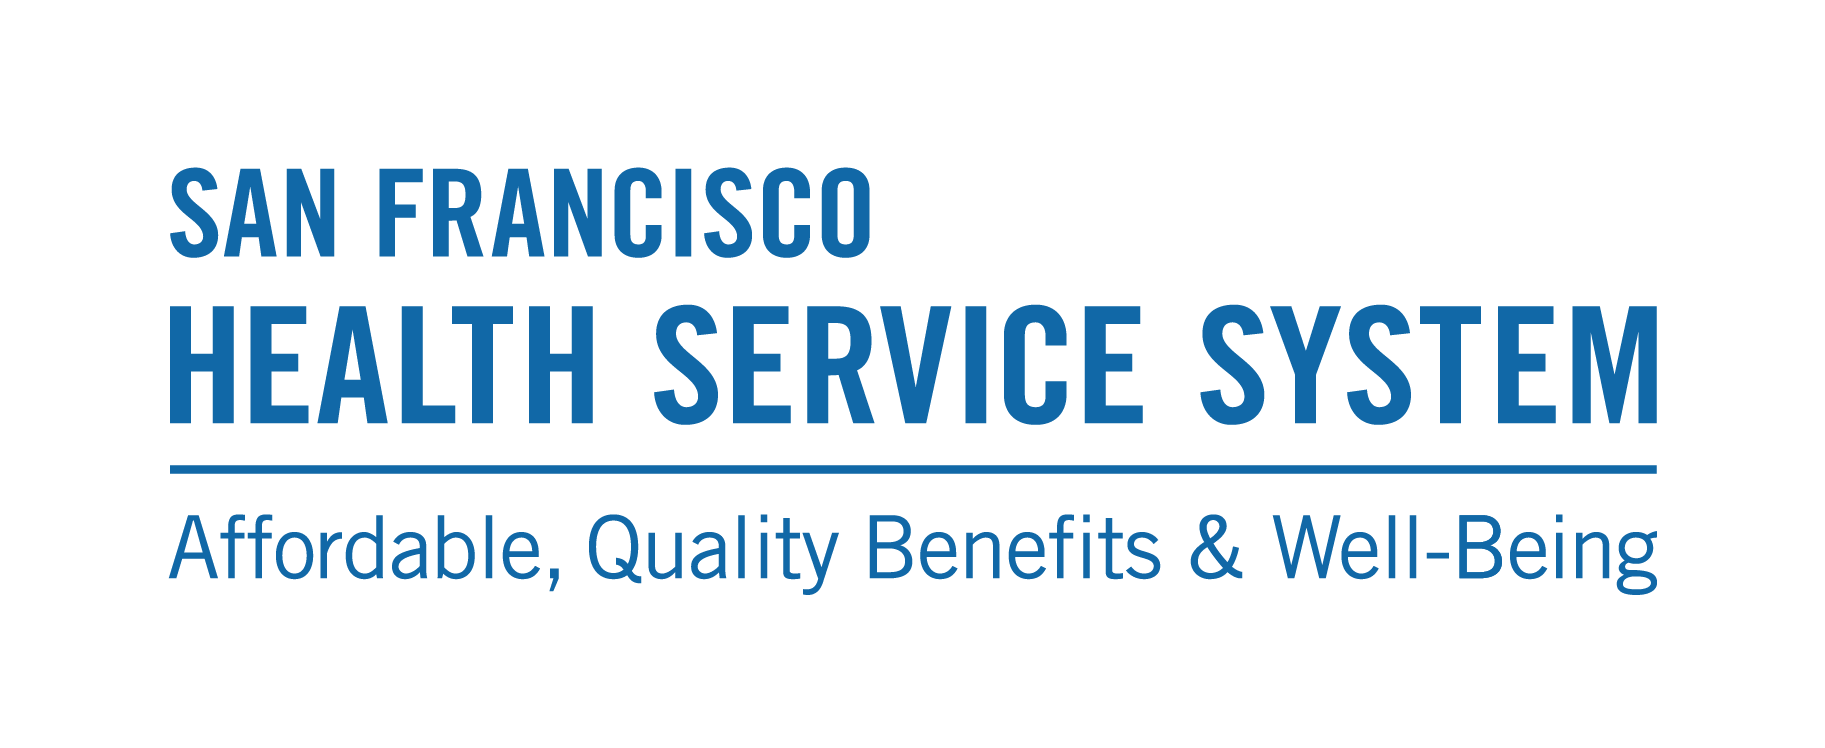 San Francisco Health Service System